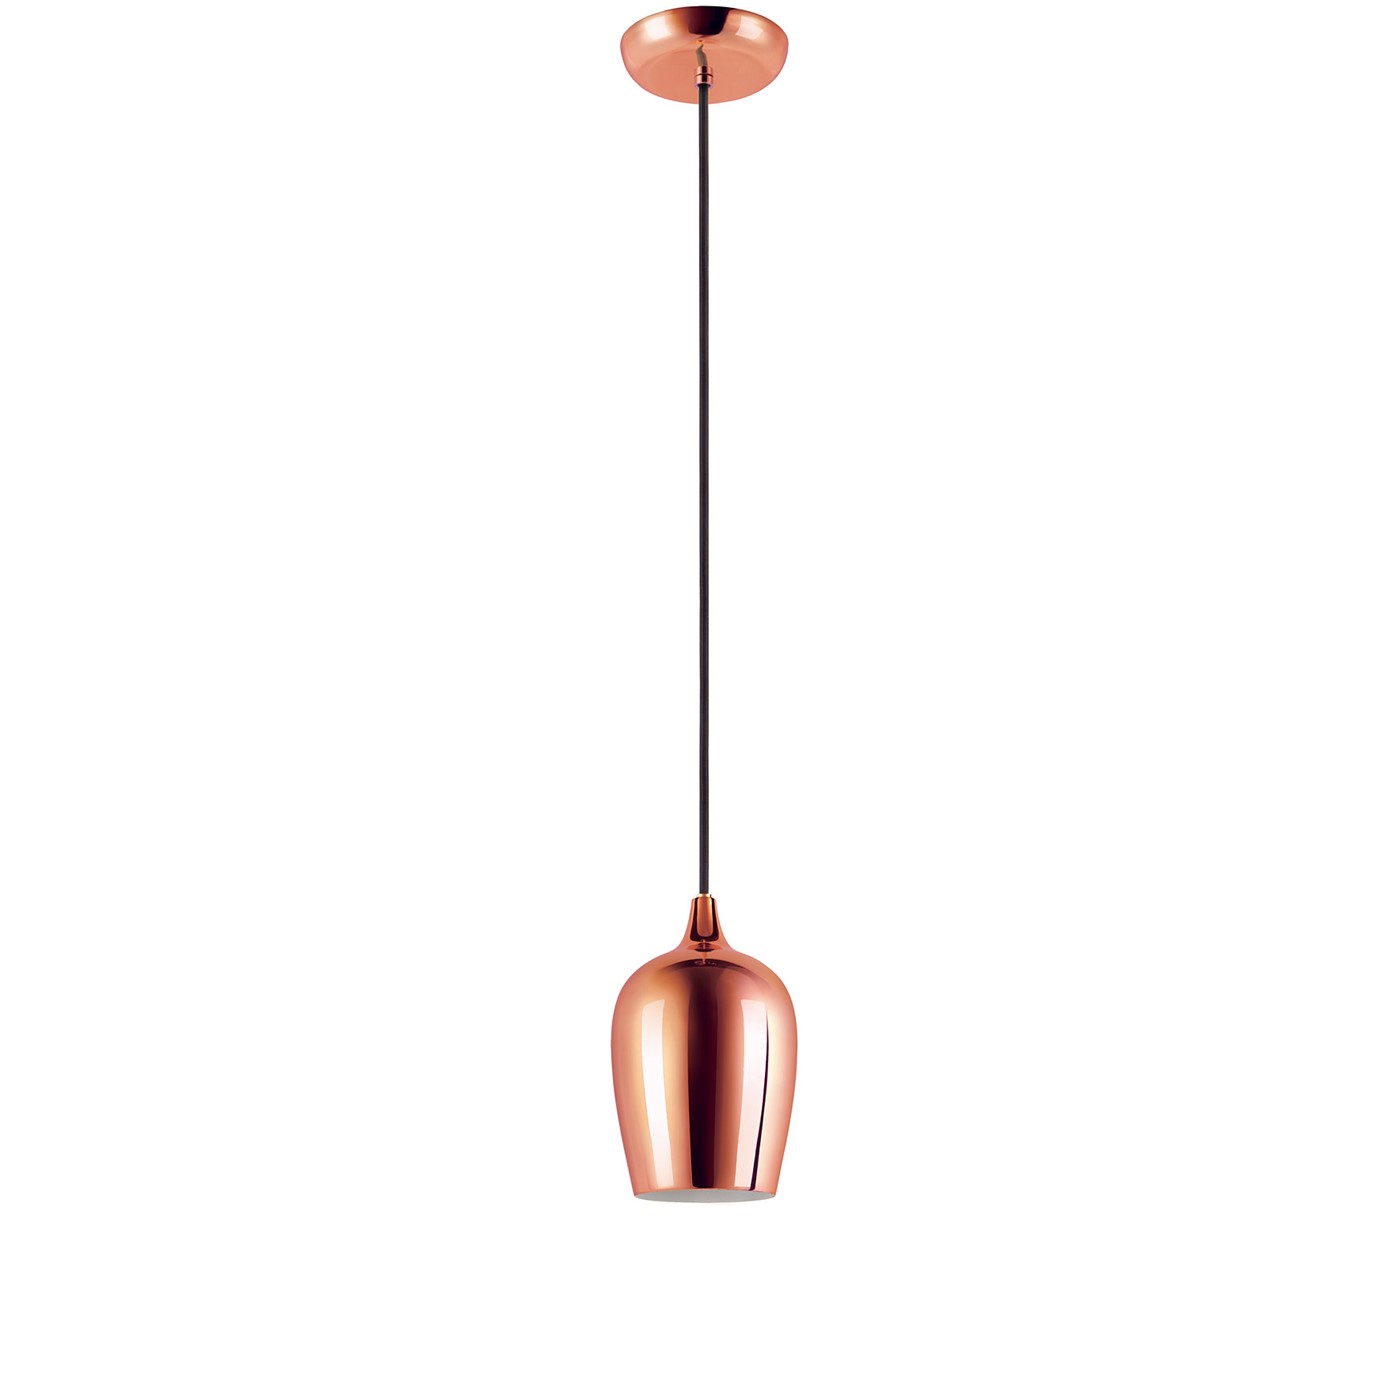 Philips 41058 Lustre pendant copper